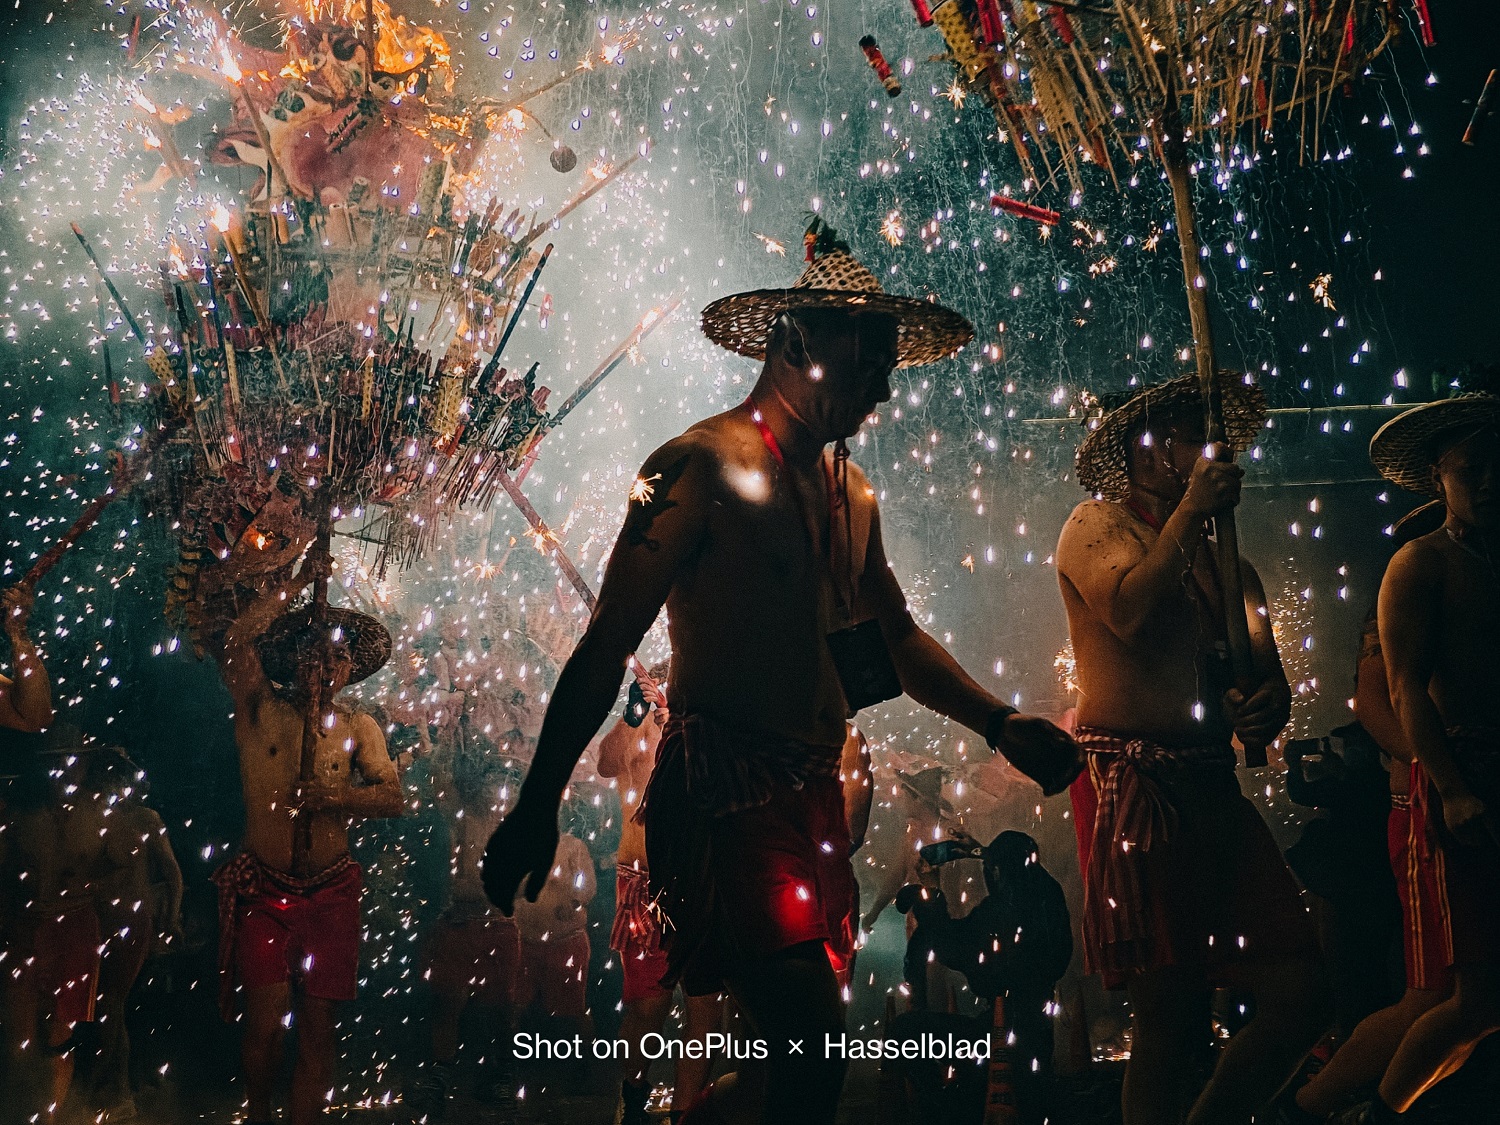 OnePlus Photography Awards 2023 Grand Winner Fire Dragon Dancer at the Night ZHUOWEN AO | OnePlus 11